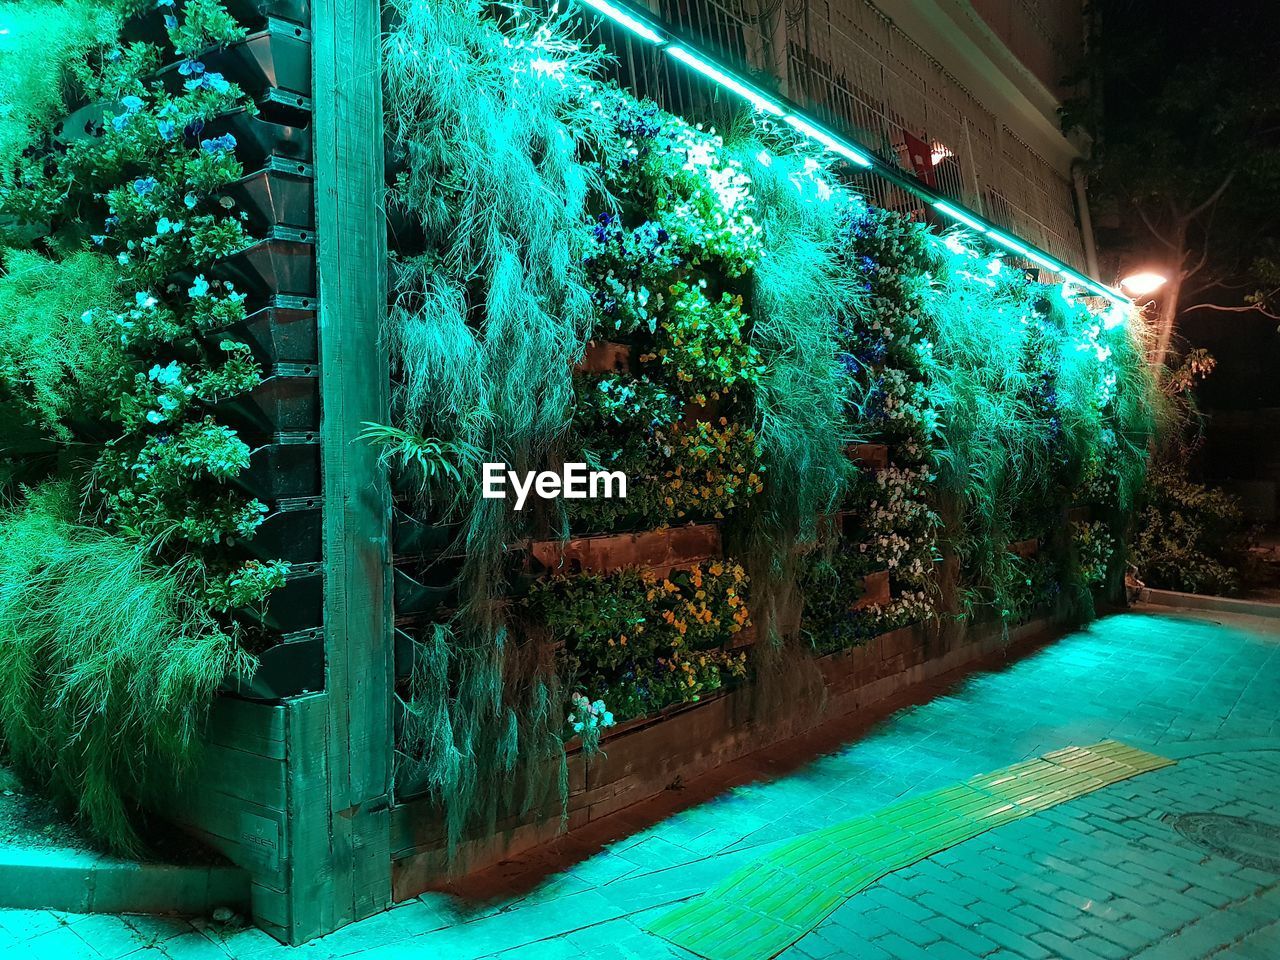 Illuminated trees by plants at night